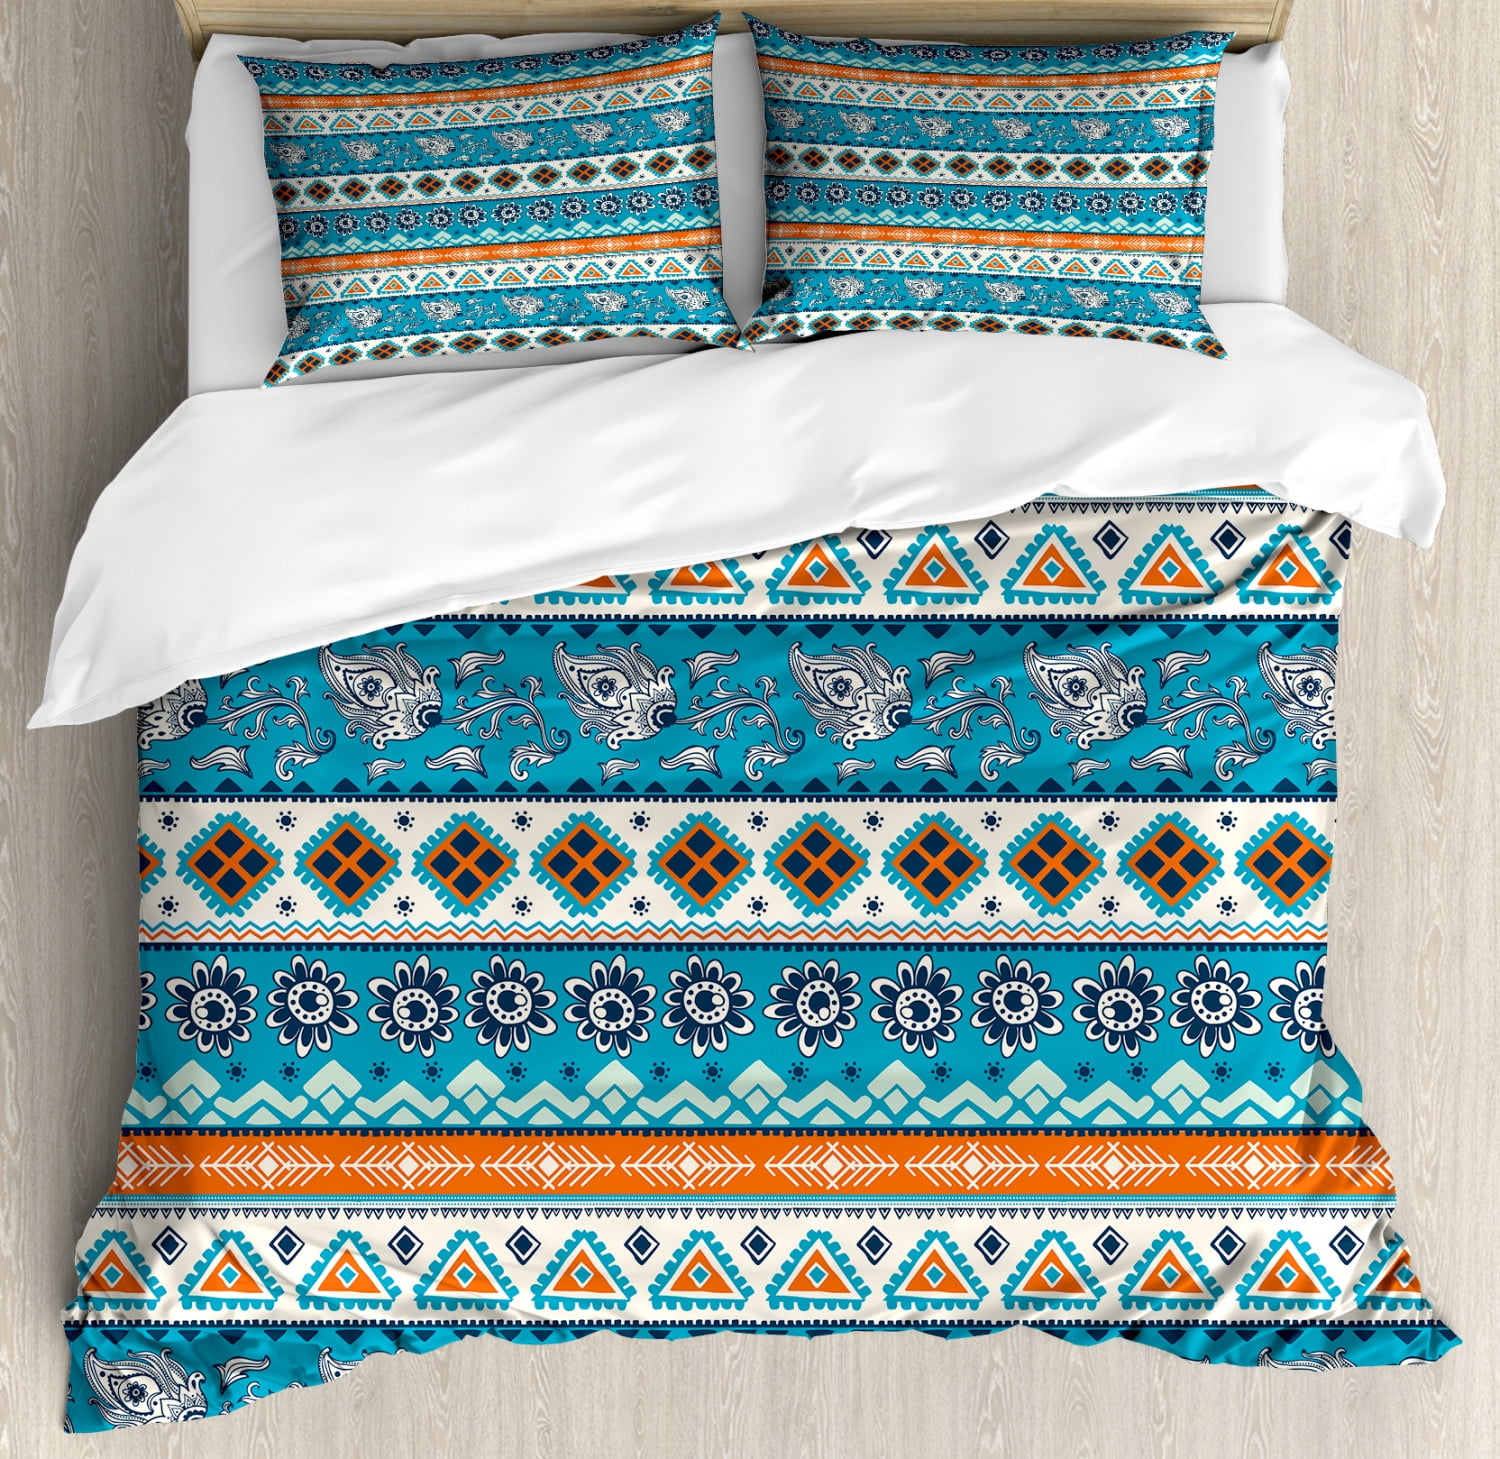 Boho Ethnic Persia Duvet Cover Set With Pillowcase Poly cotton Bedding All Sizes 